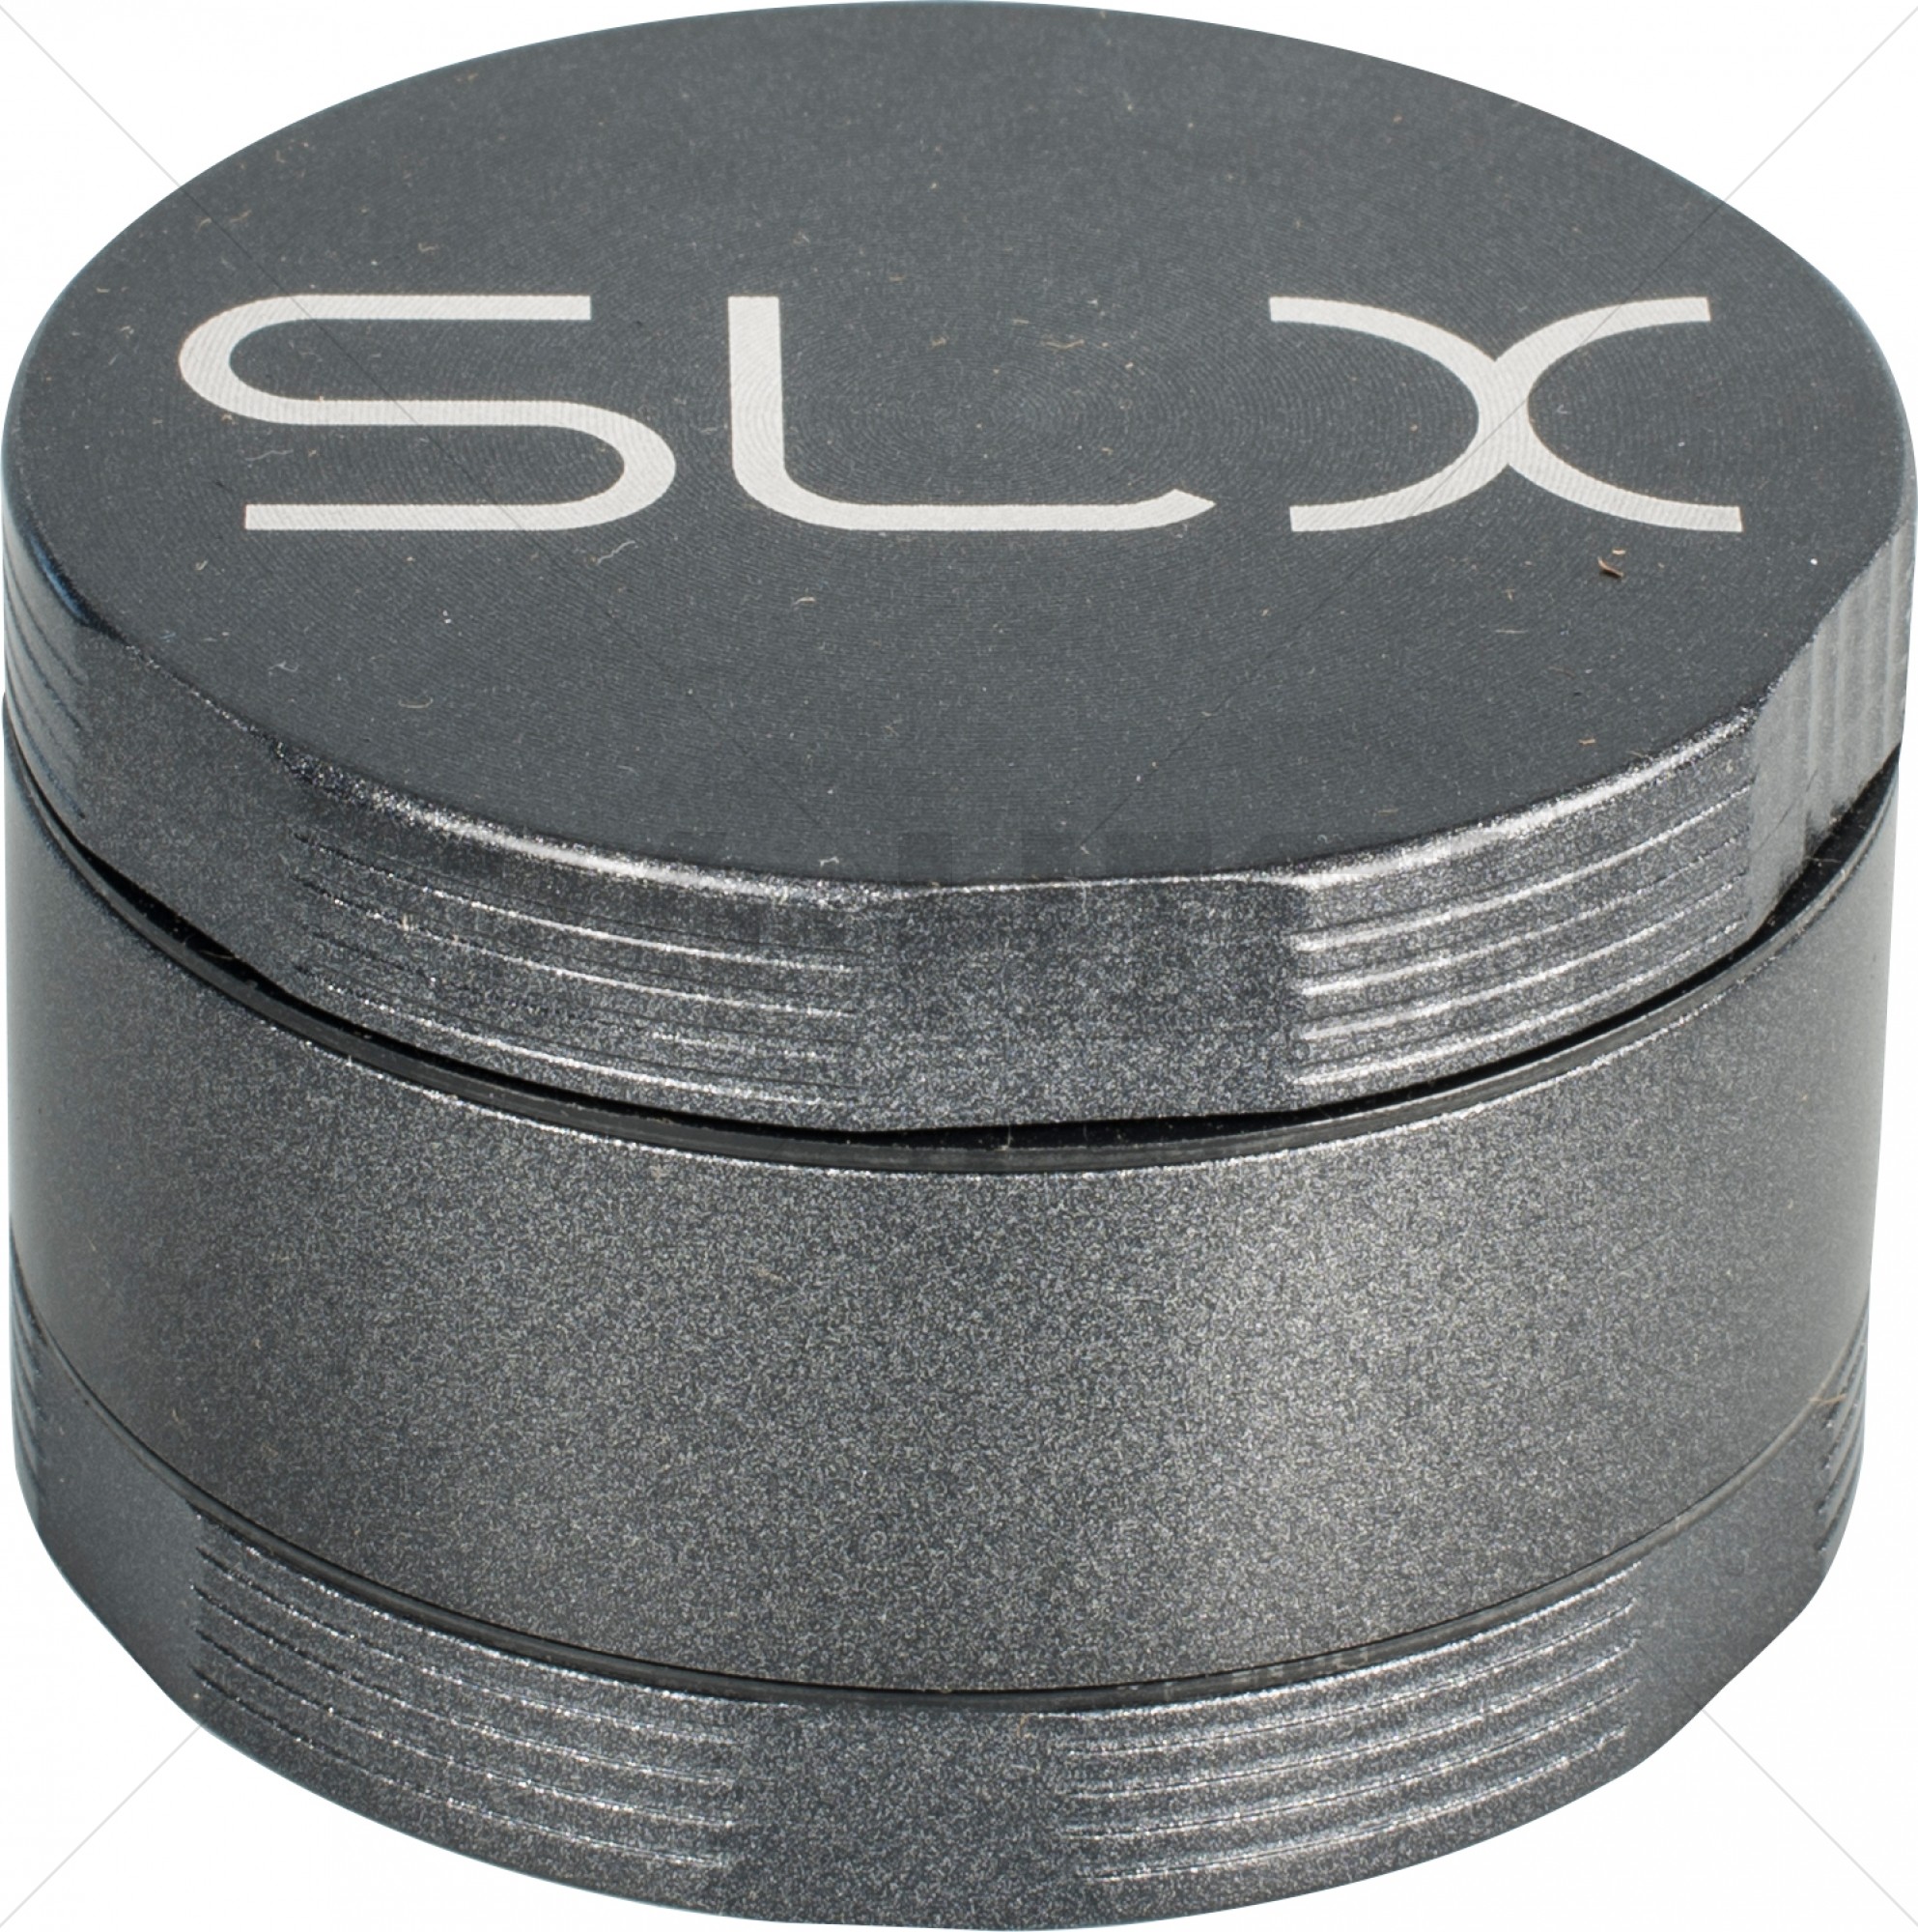 SLX Grinder Aluminium Non Sticky 62 mm - Charcoal